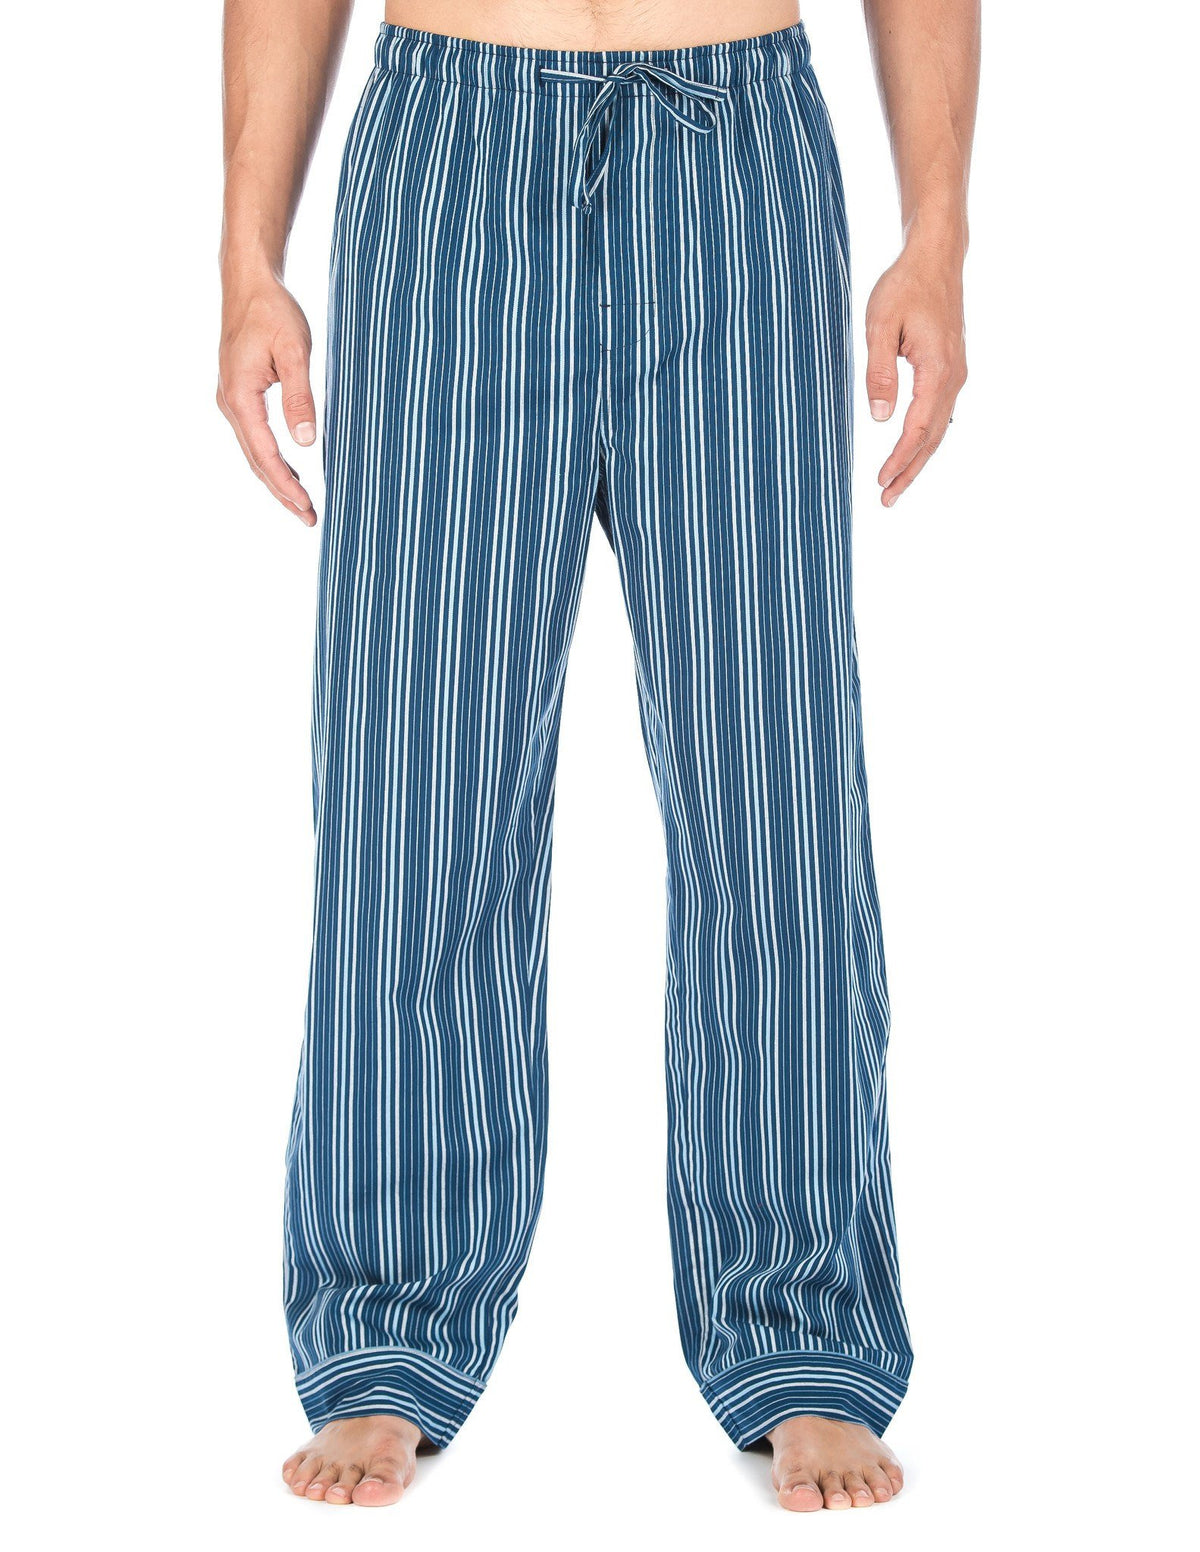 Men's 100% Cotton Comfort-Fit Sleep/Lounge Pants - Stripes Dark Blue